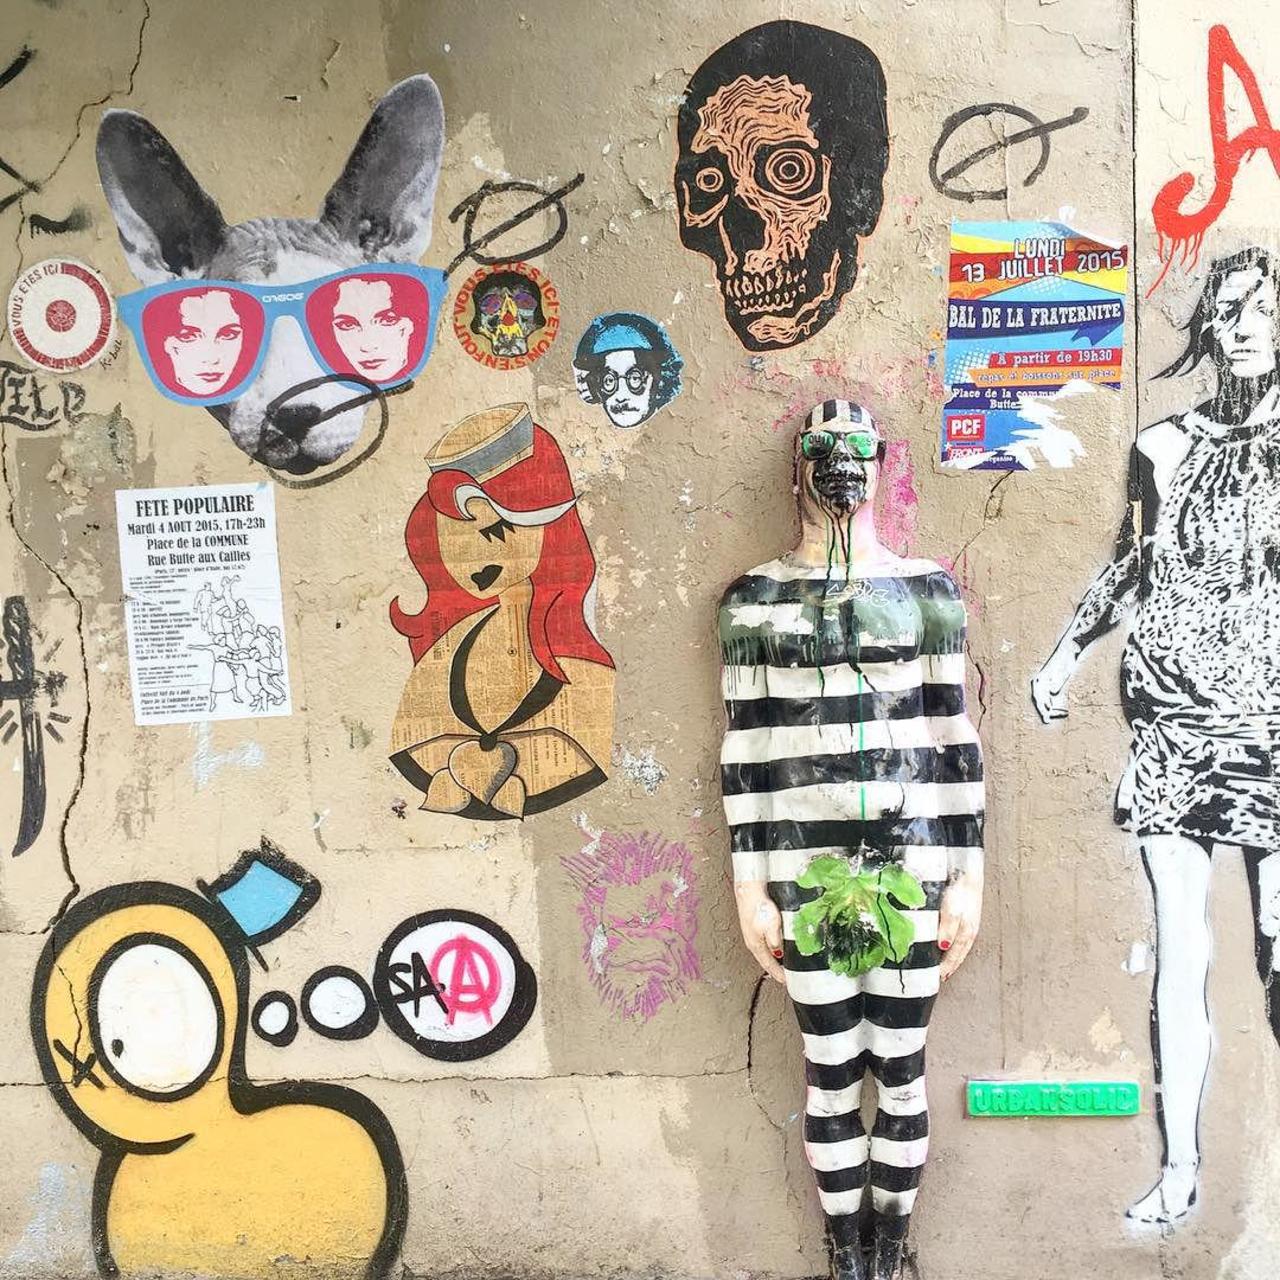 #Paris #graffiti photo by @catscoffeecreativity http://ift.tt/1LvKpAU #StreetArt http://t.co/dgJx29OV0z